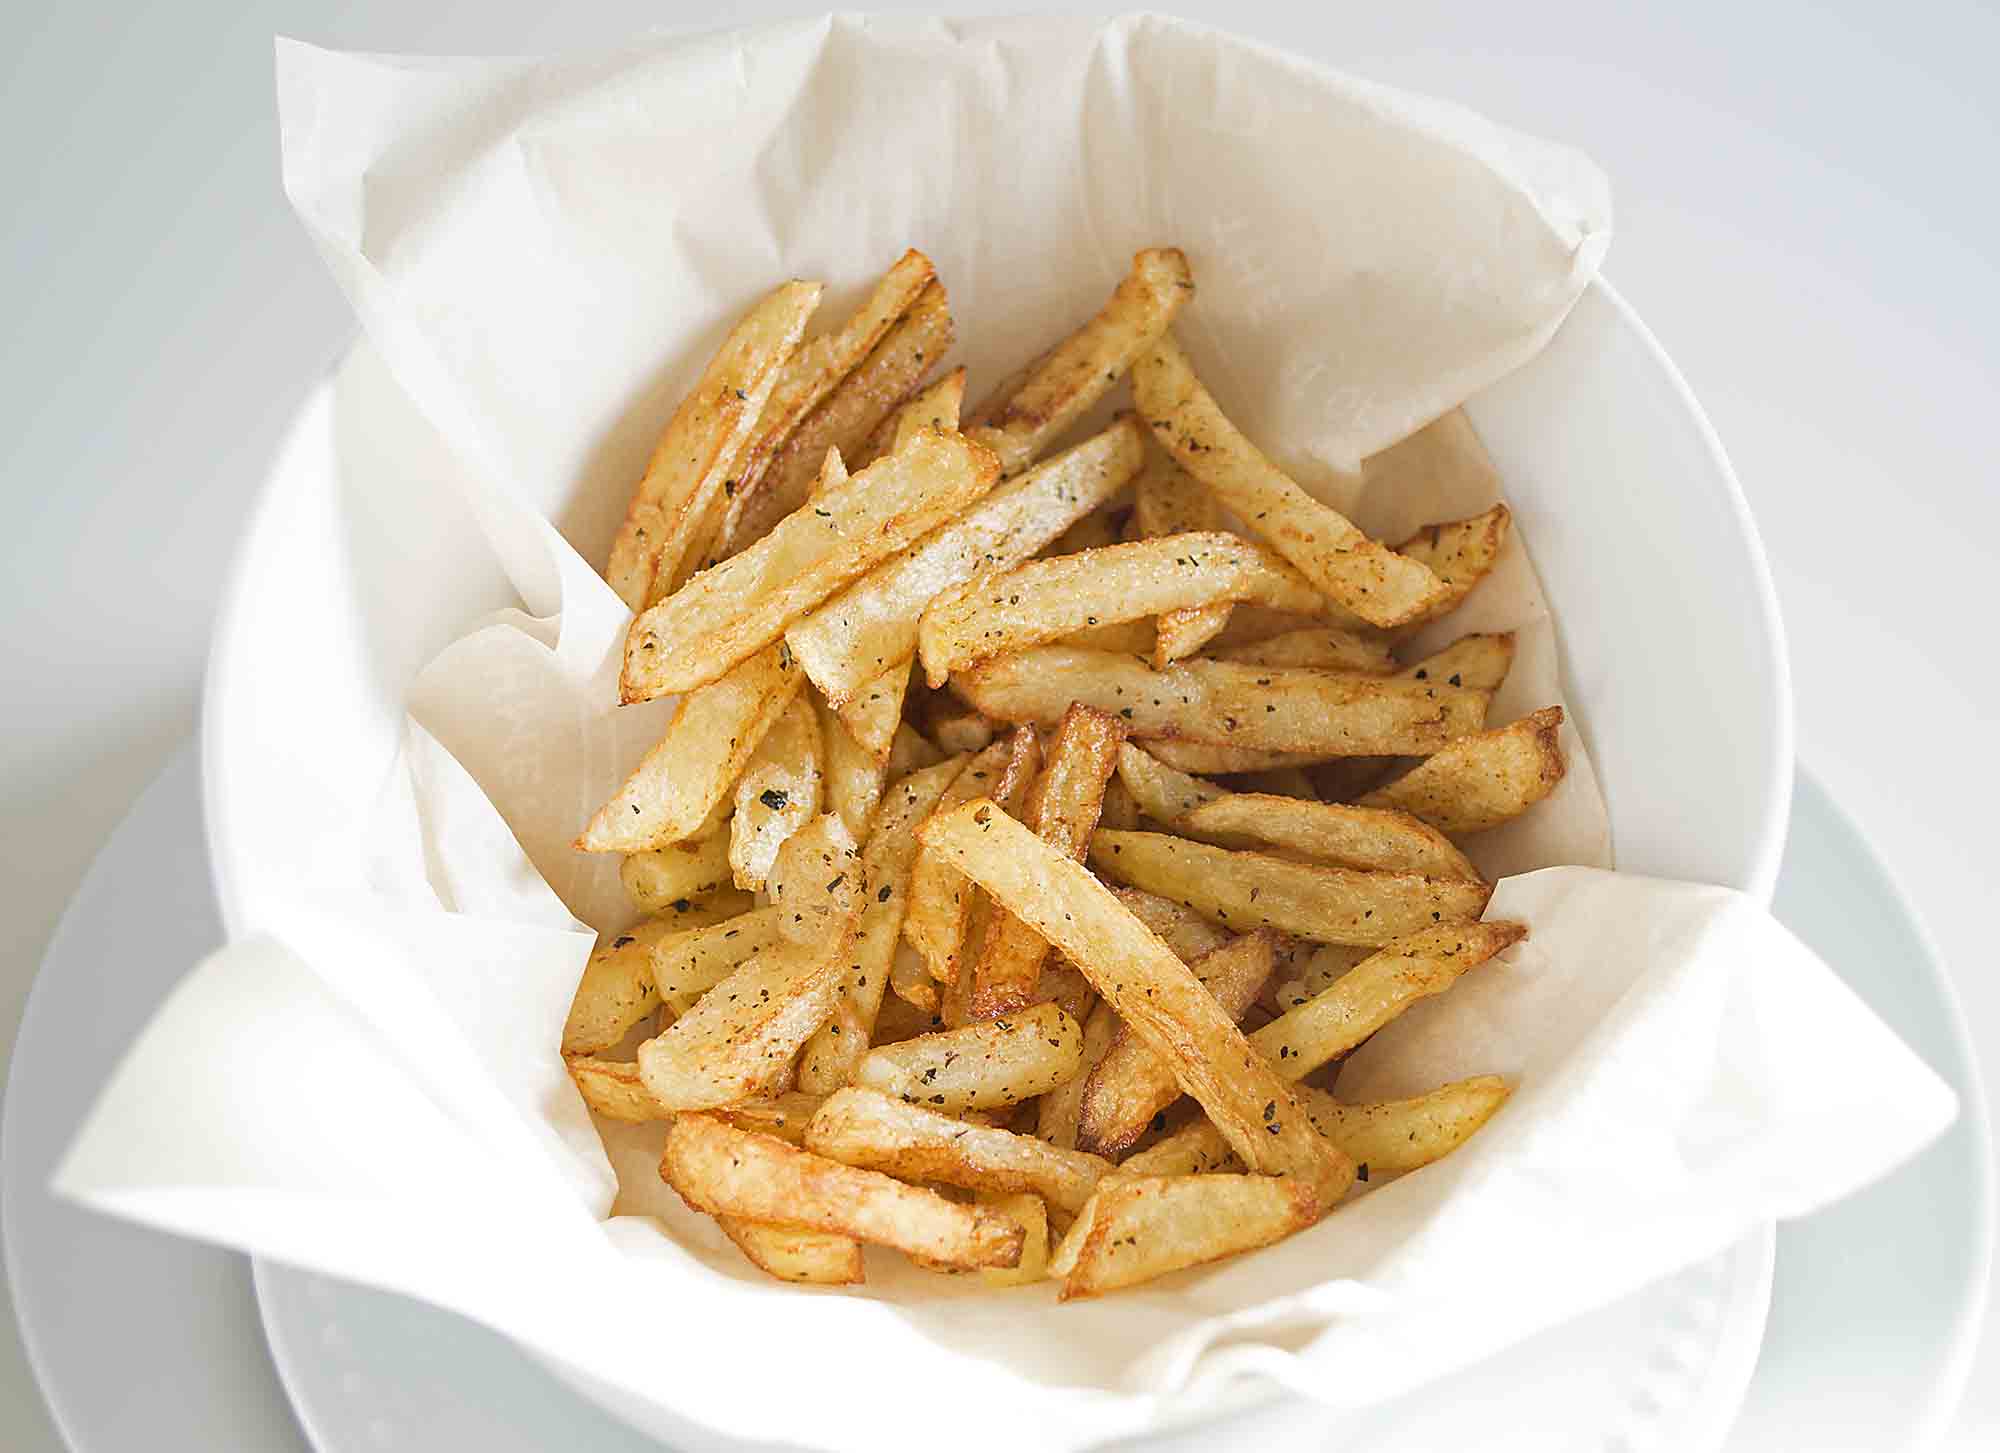 https://www.vegandaydream.com/wp-content/uploads/2015/02/Bowl-of-French-Seasoned-French-Fries.jpg